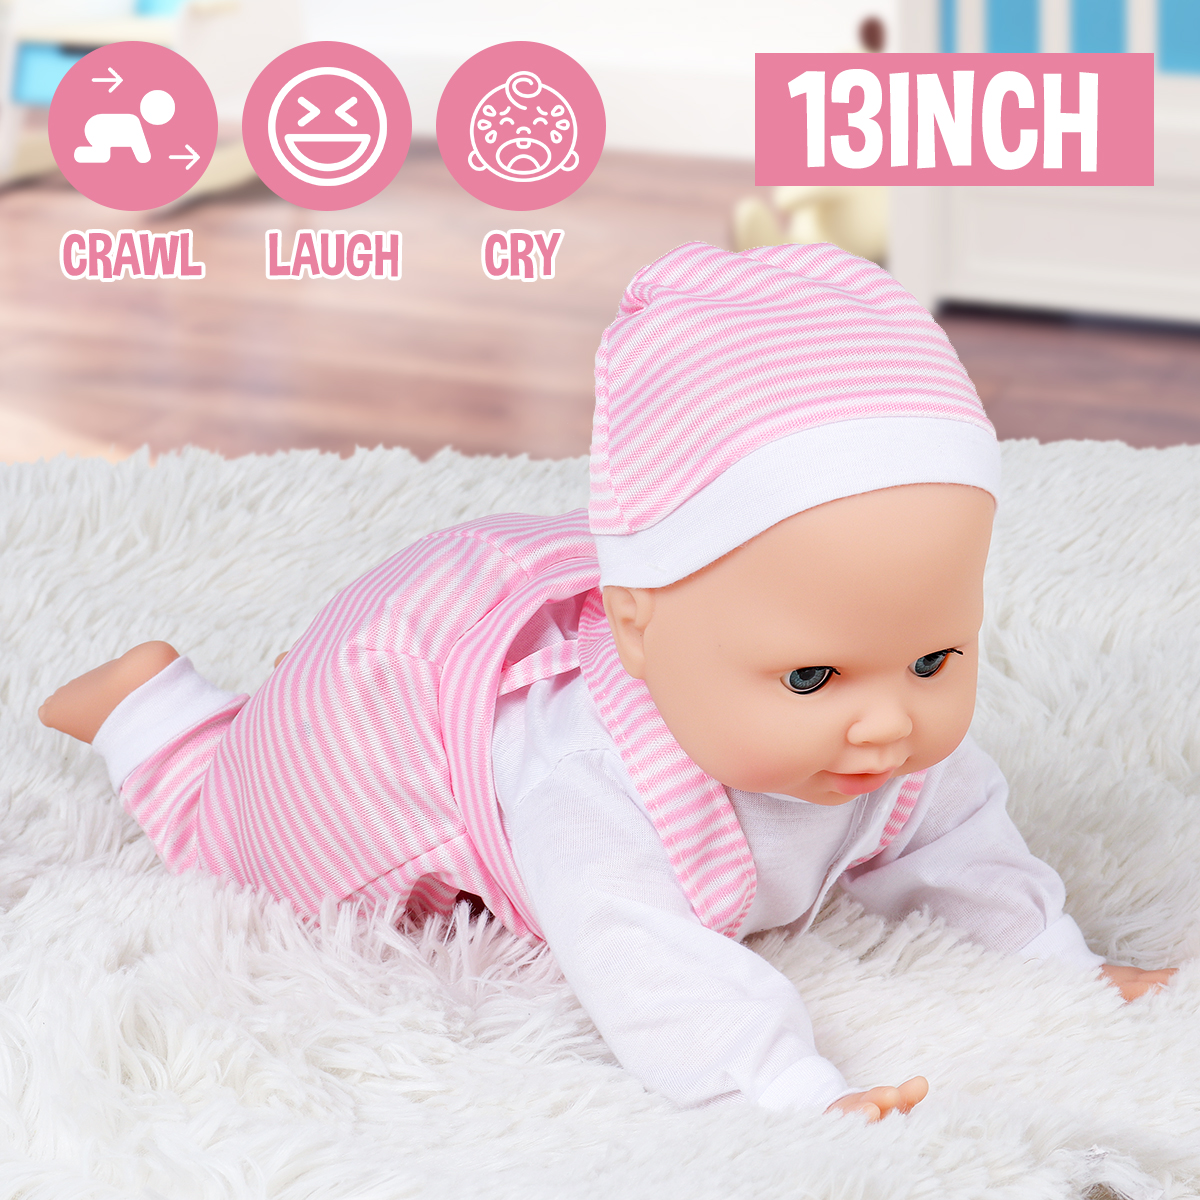 13Inch-Simulation-Vinyl-Doll-Crawling-Doll-Baby-Crawling-Toddler-Simulation-Doll-Childrens-Toys-1818658-1